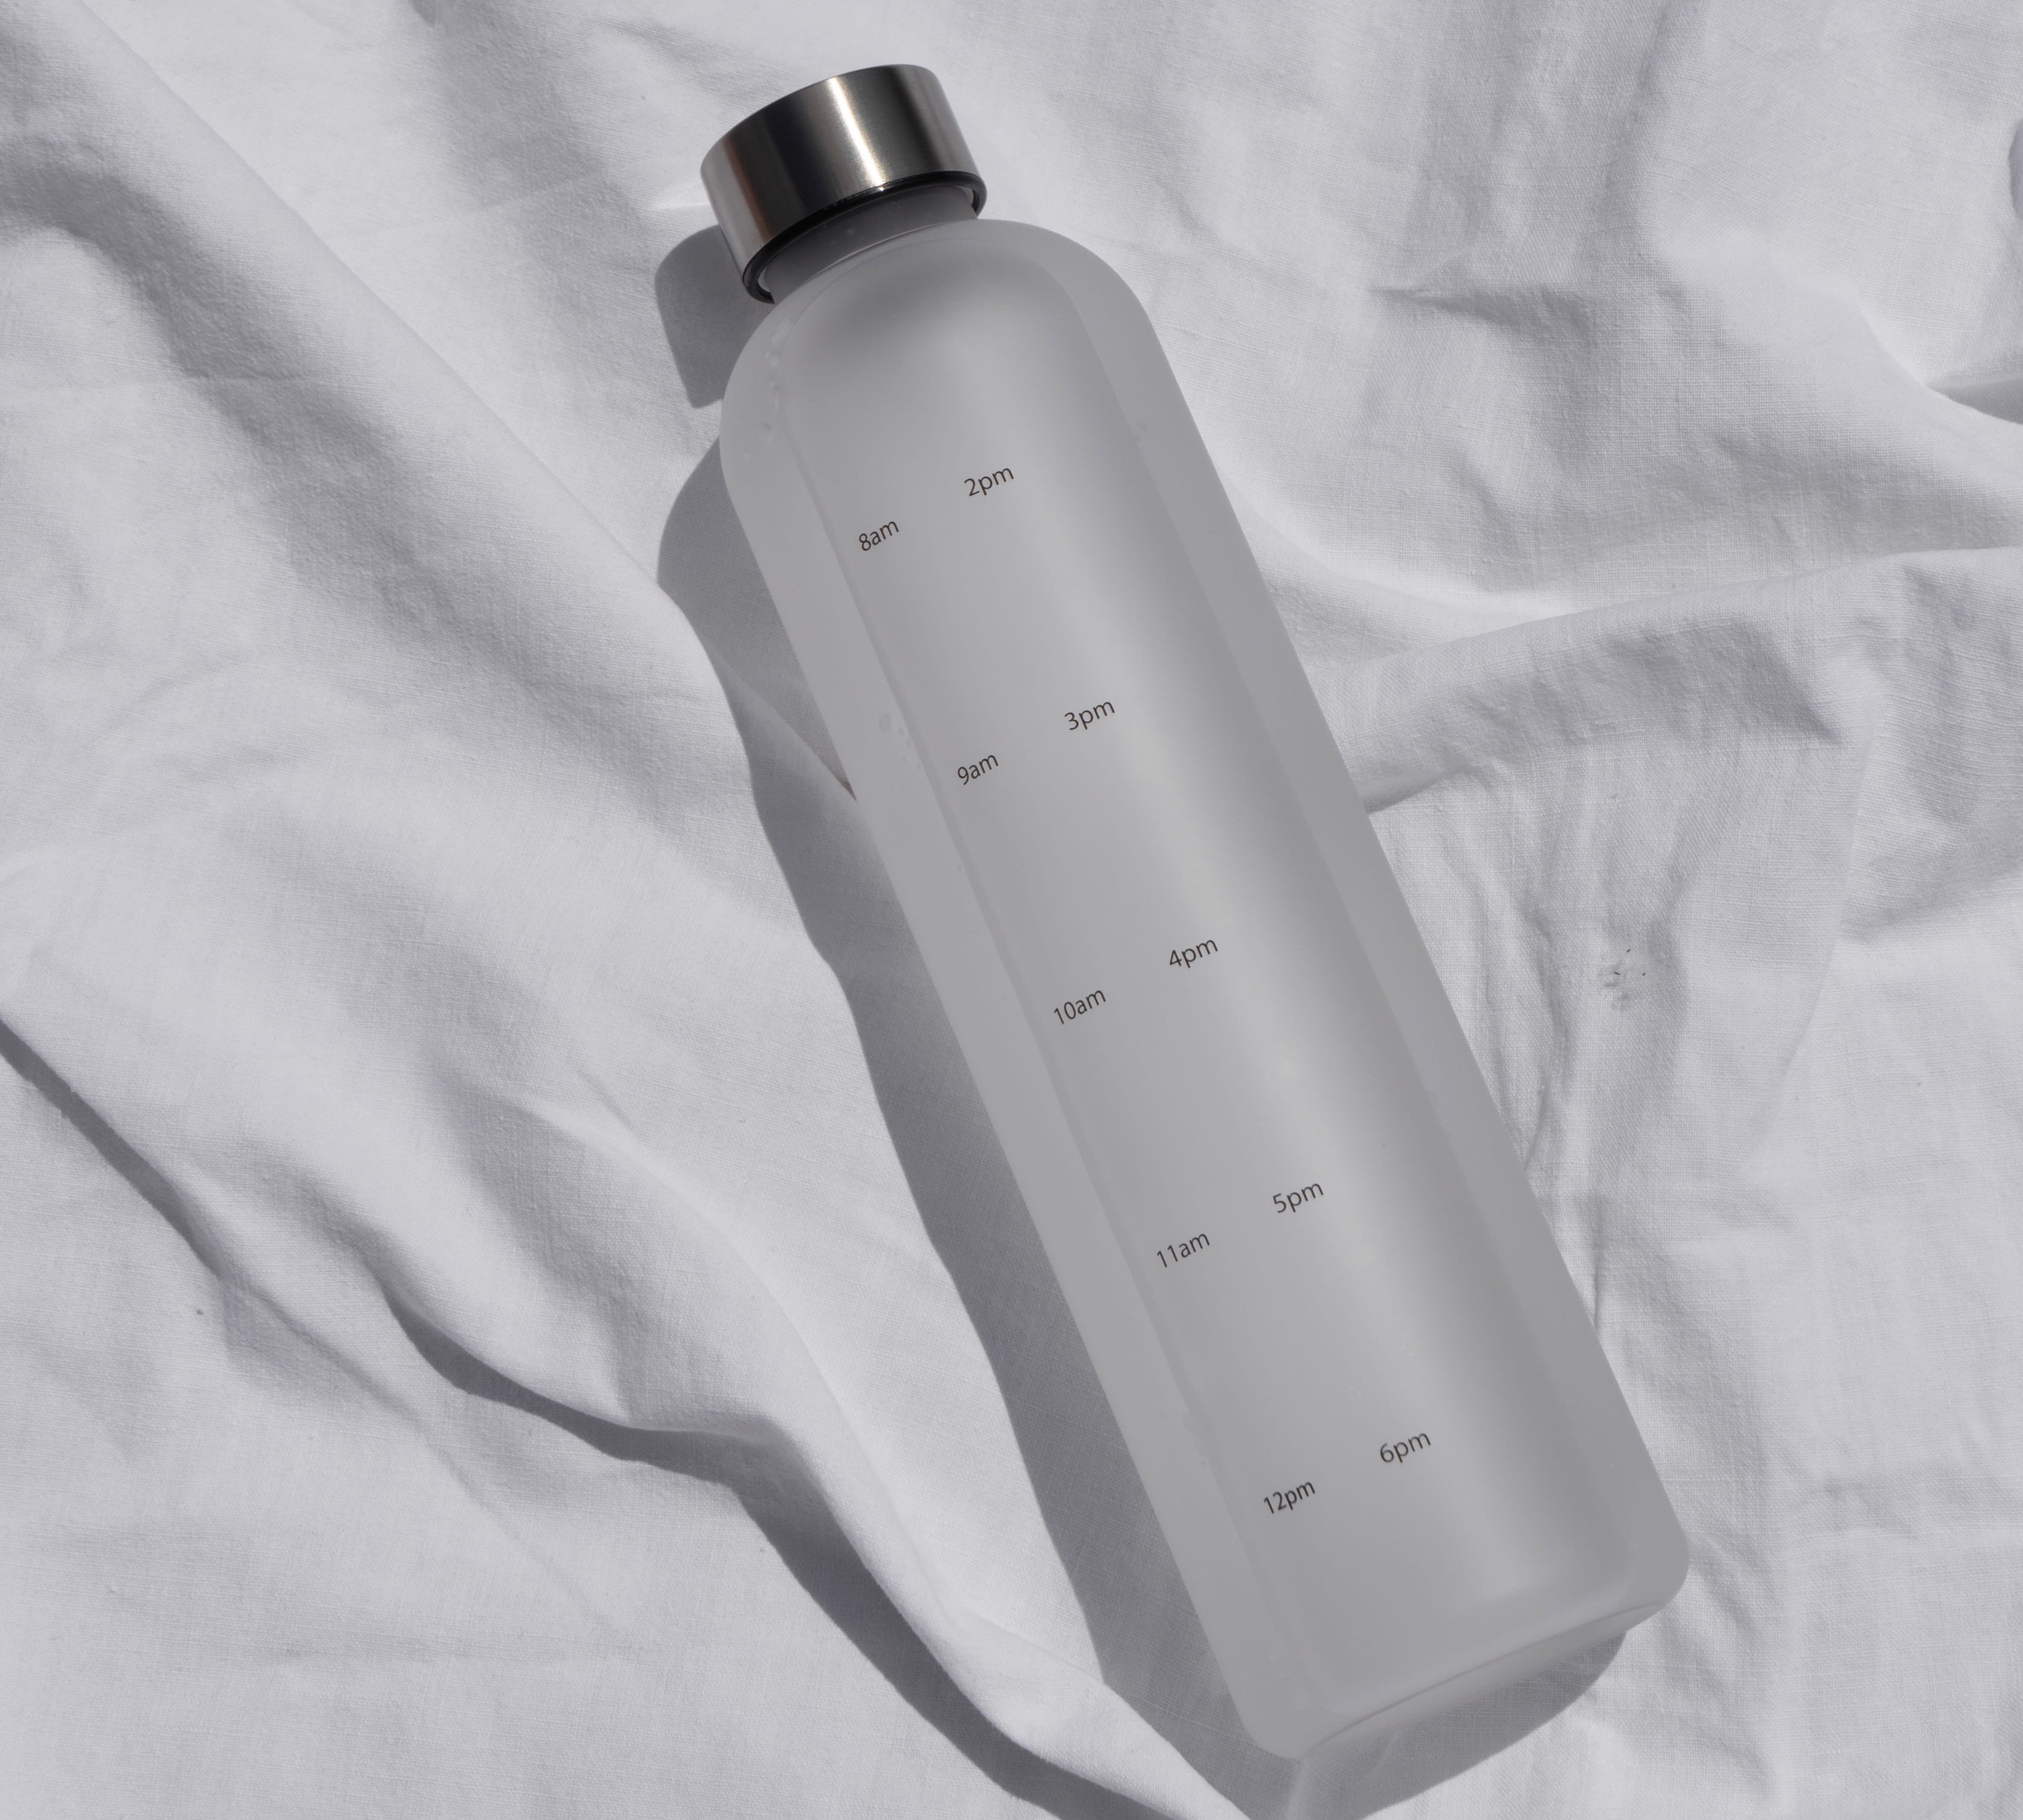 Water tracking bottle on white sheet